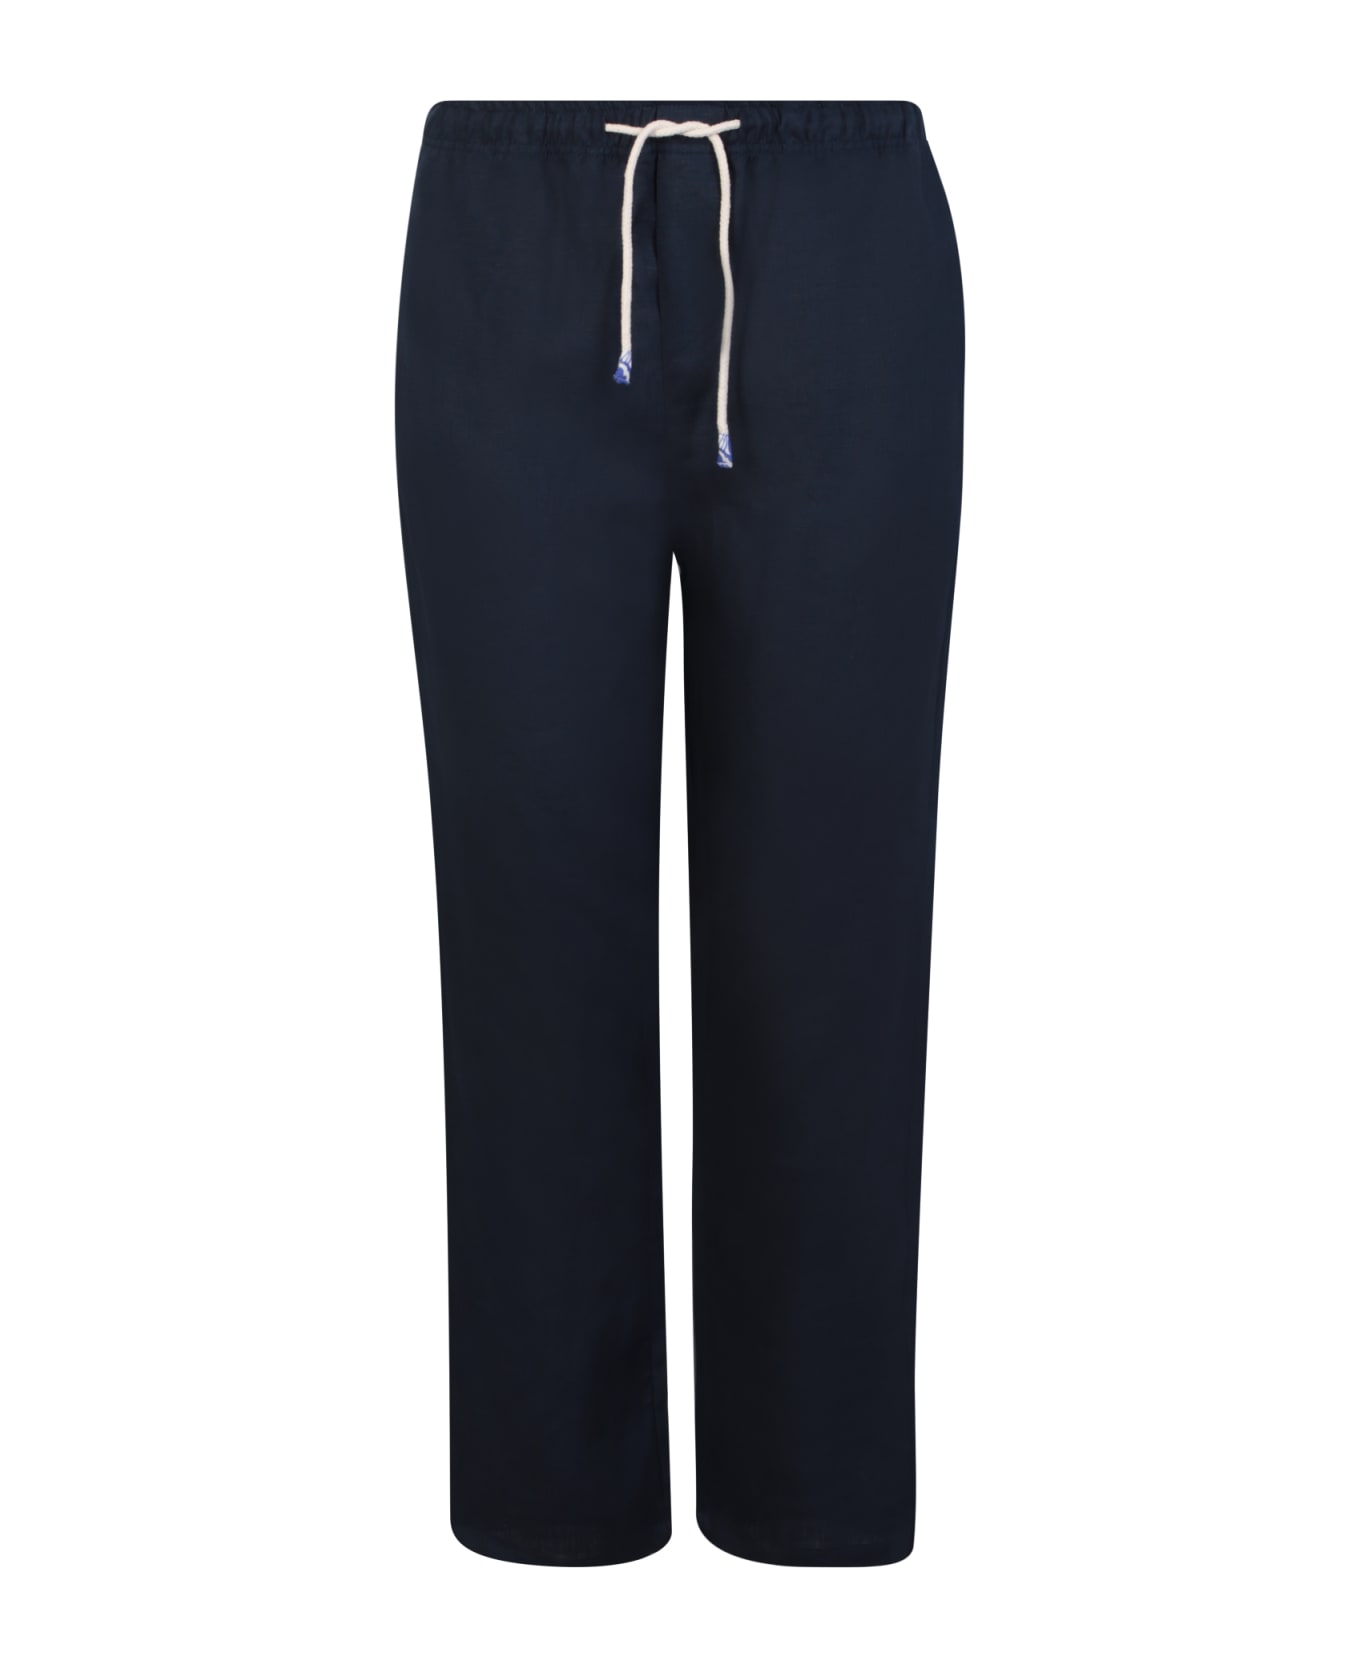 Peninsula Swimwear Stromboli Linen Blue Trousers - Blue スウェットパンツ